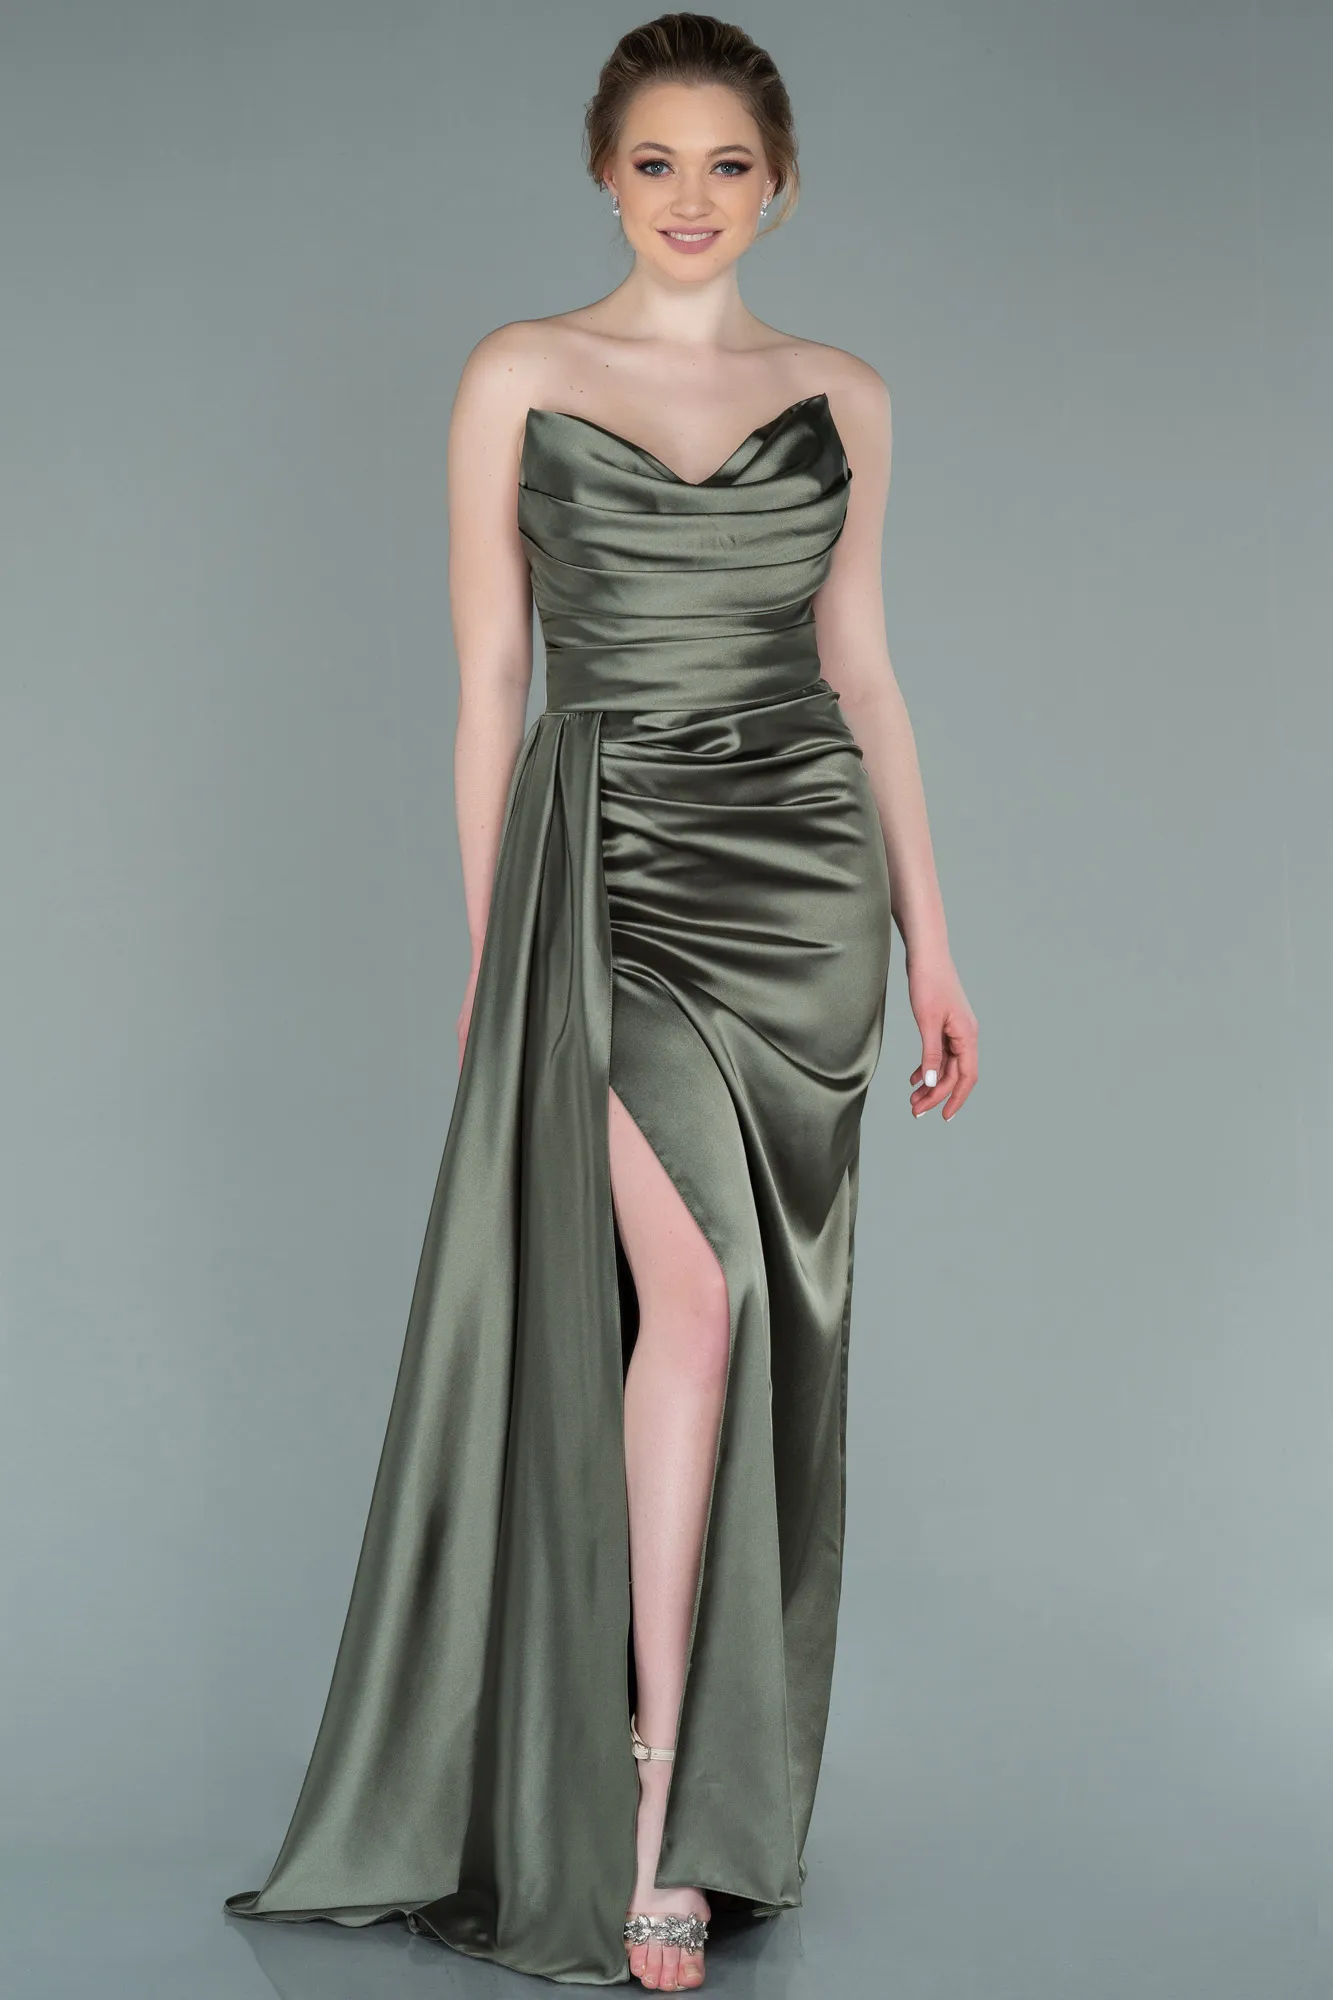 Olive Drab-Mermaid Evening Dress ABU3443